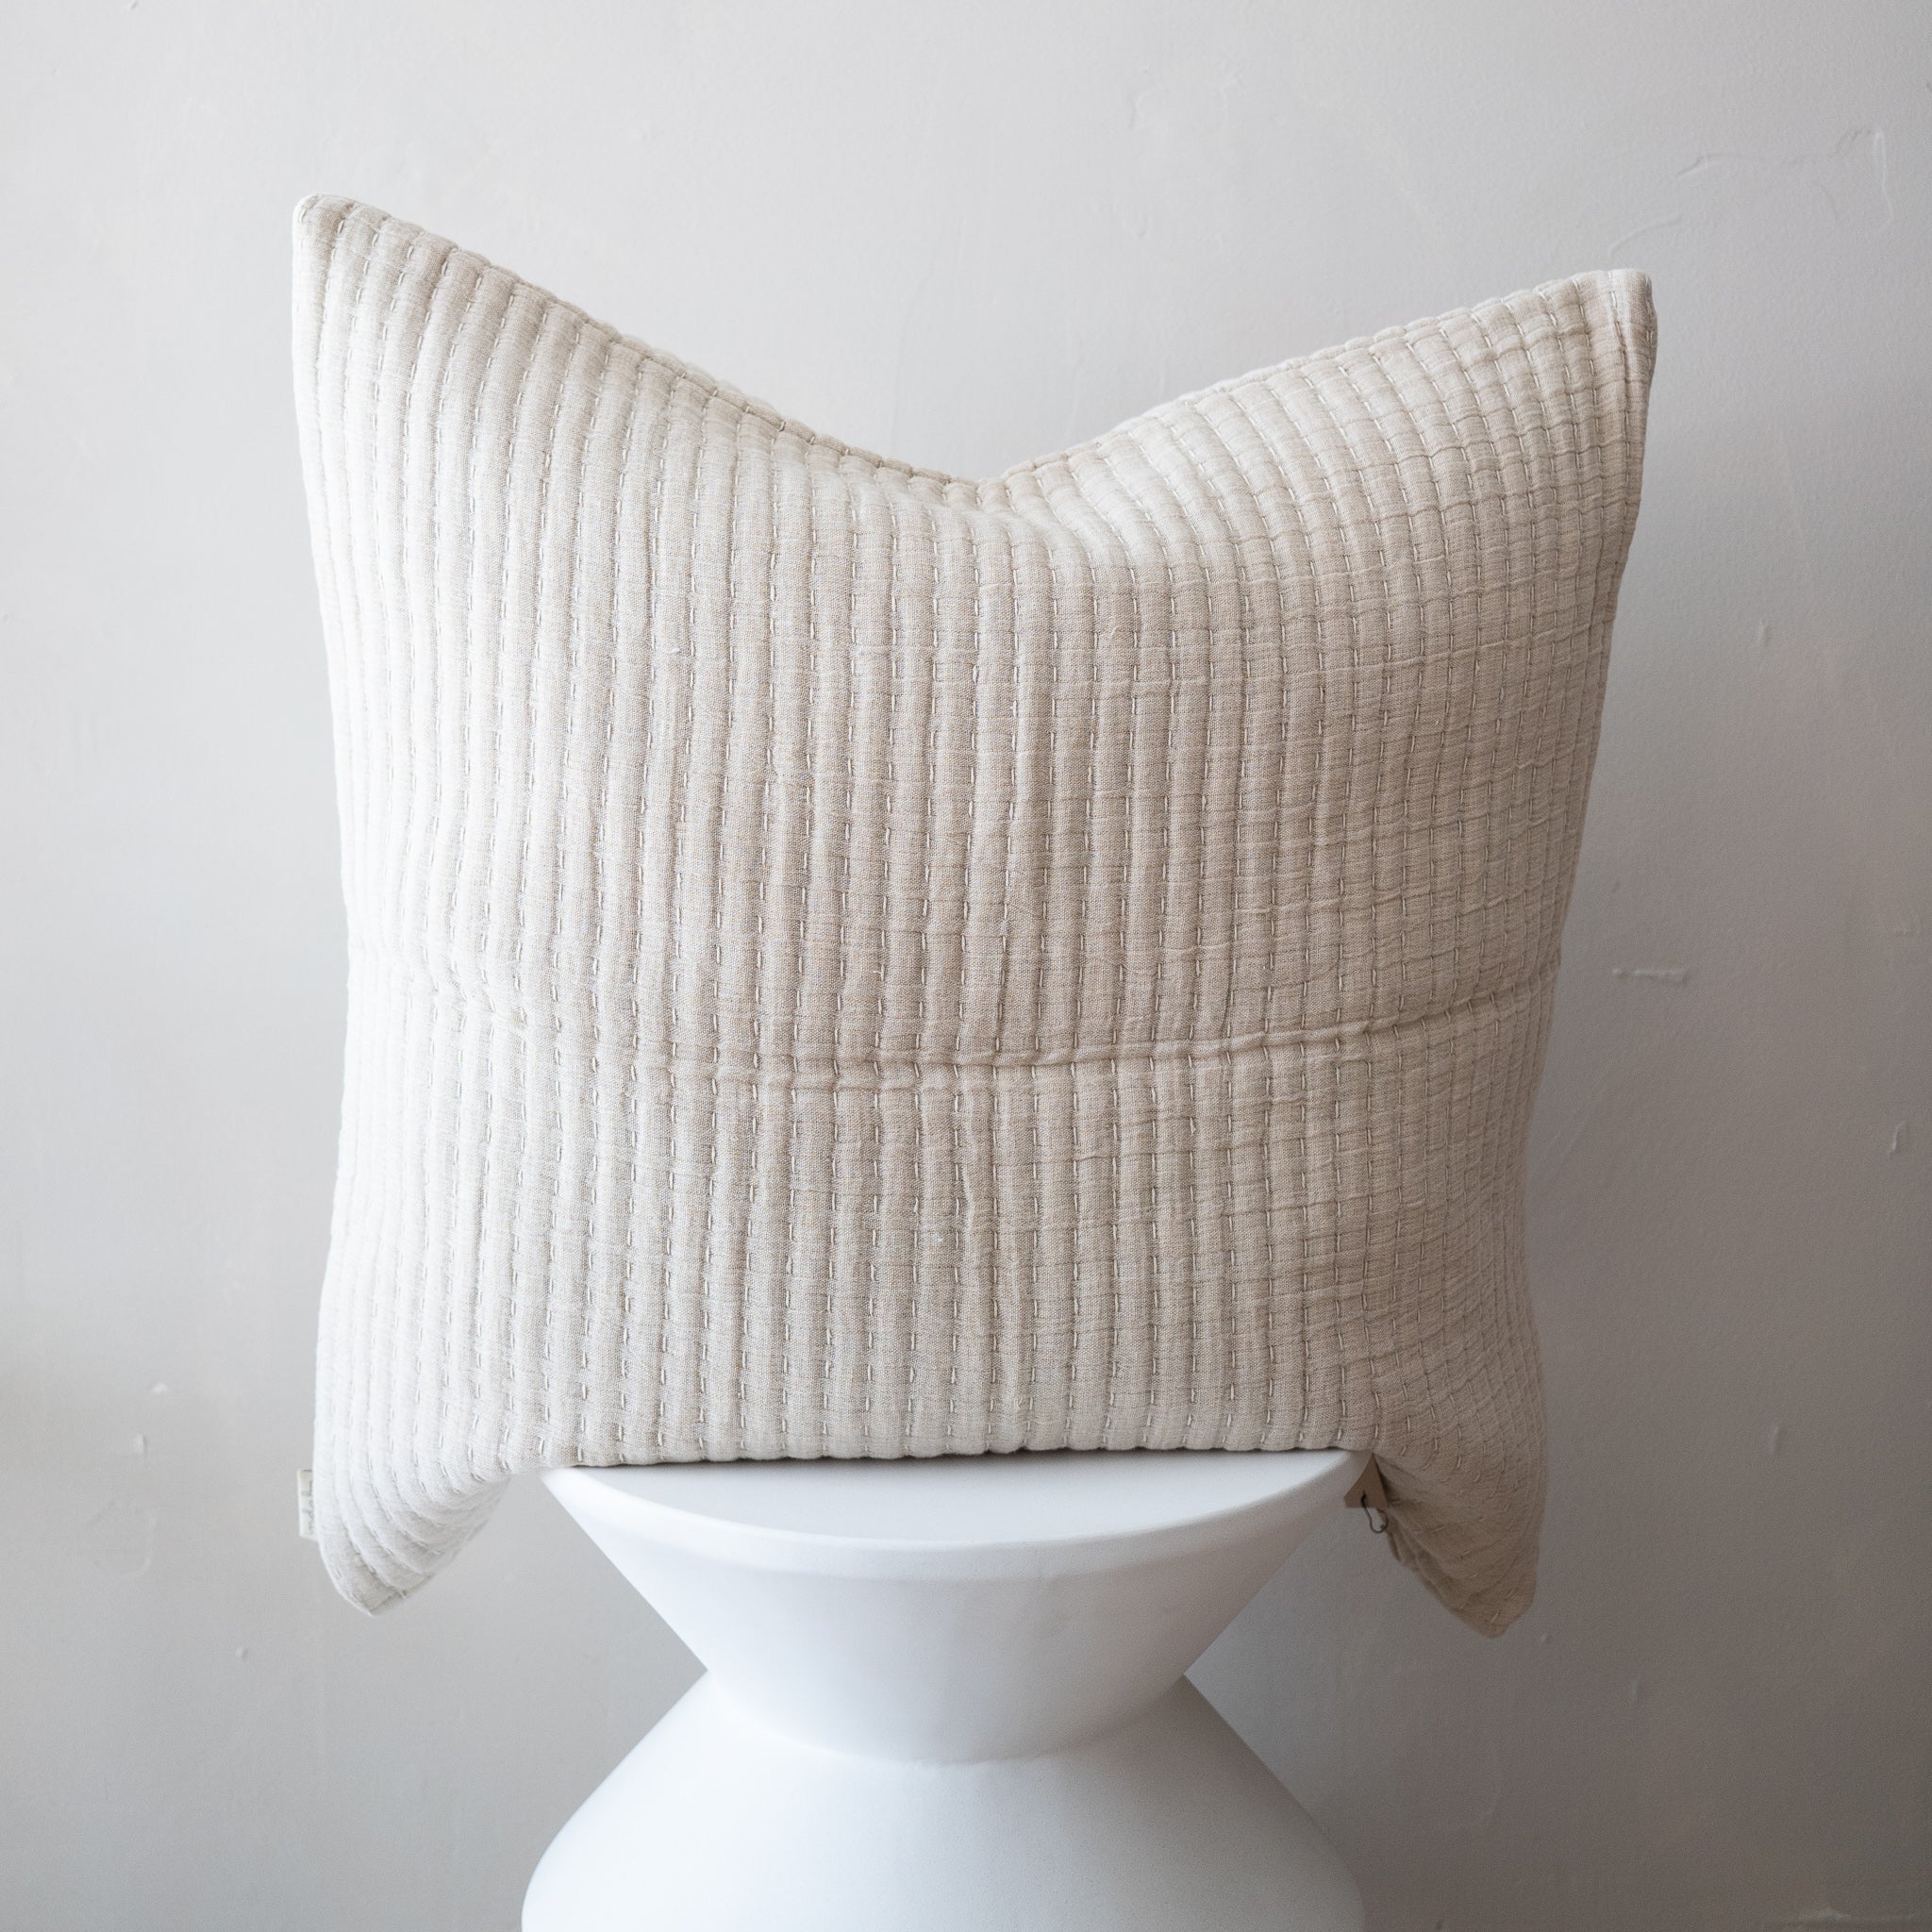 Kantha-Stitch Pillow